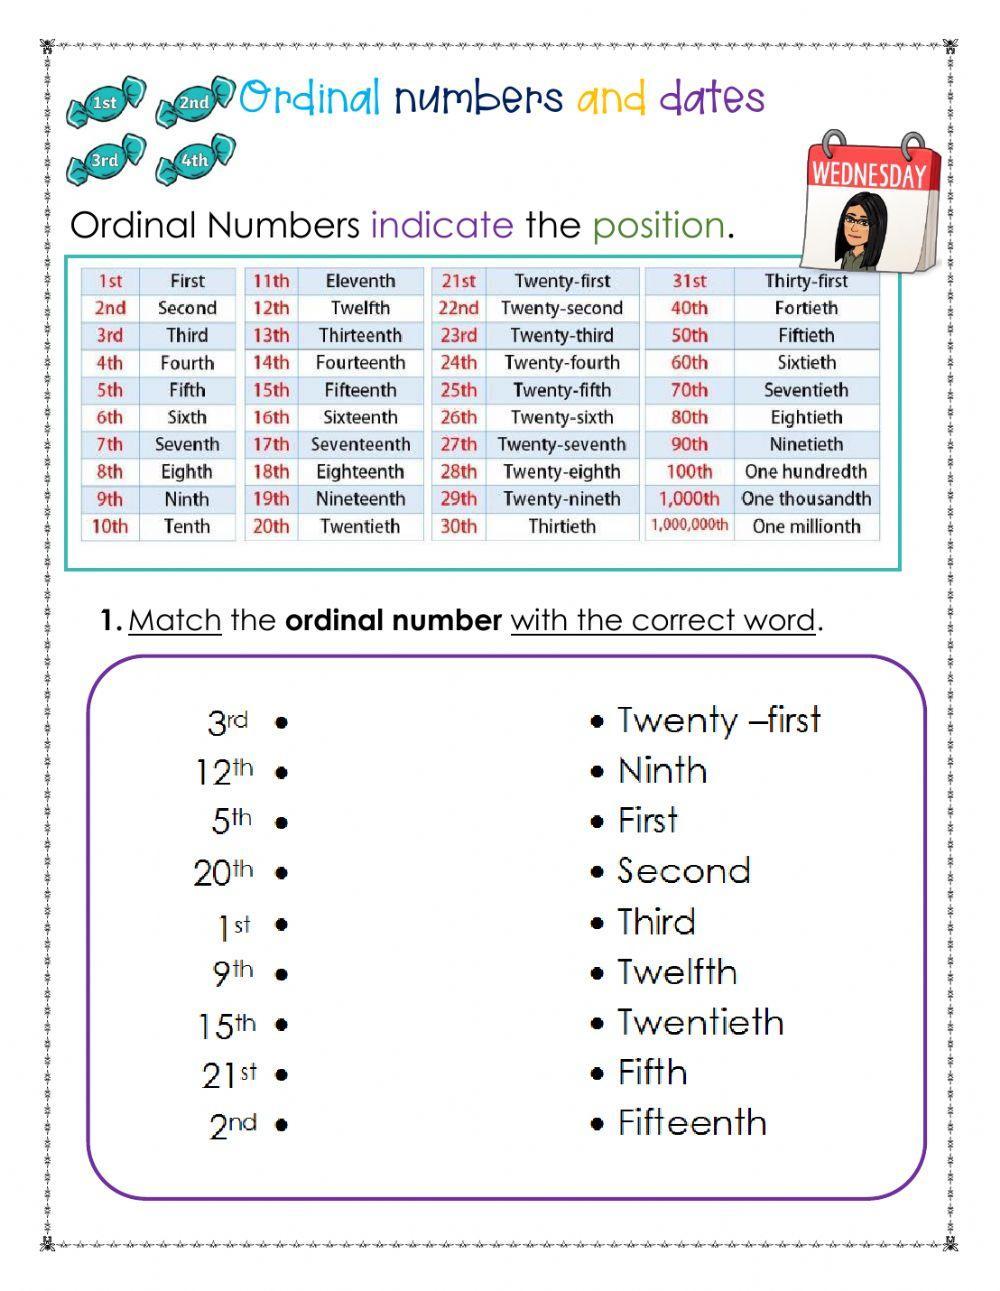 Ordinal Numbers - dates